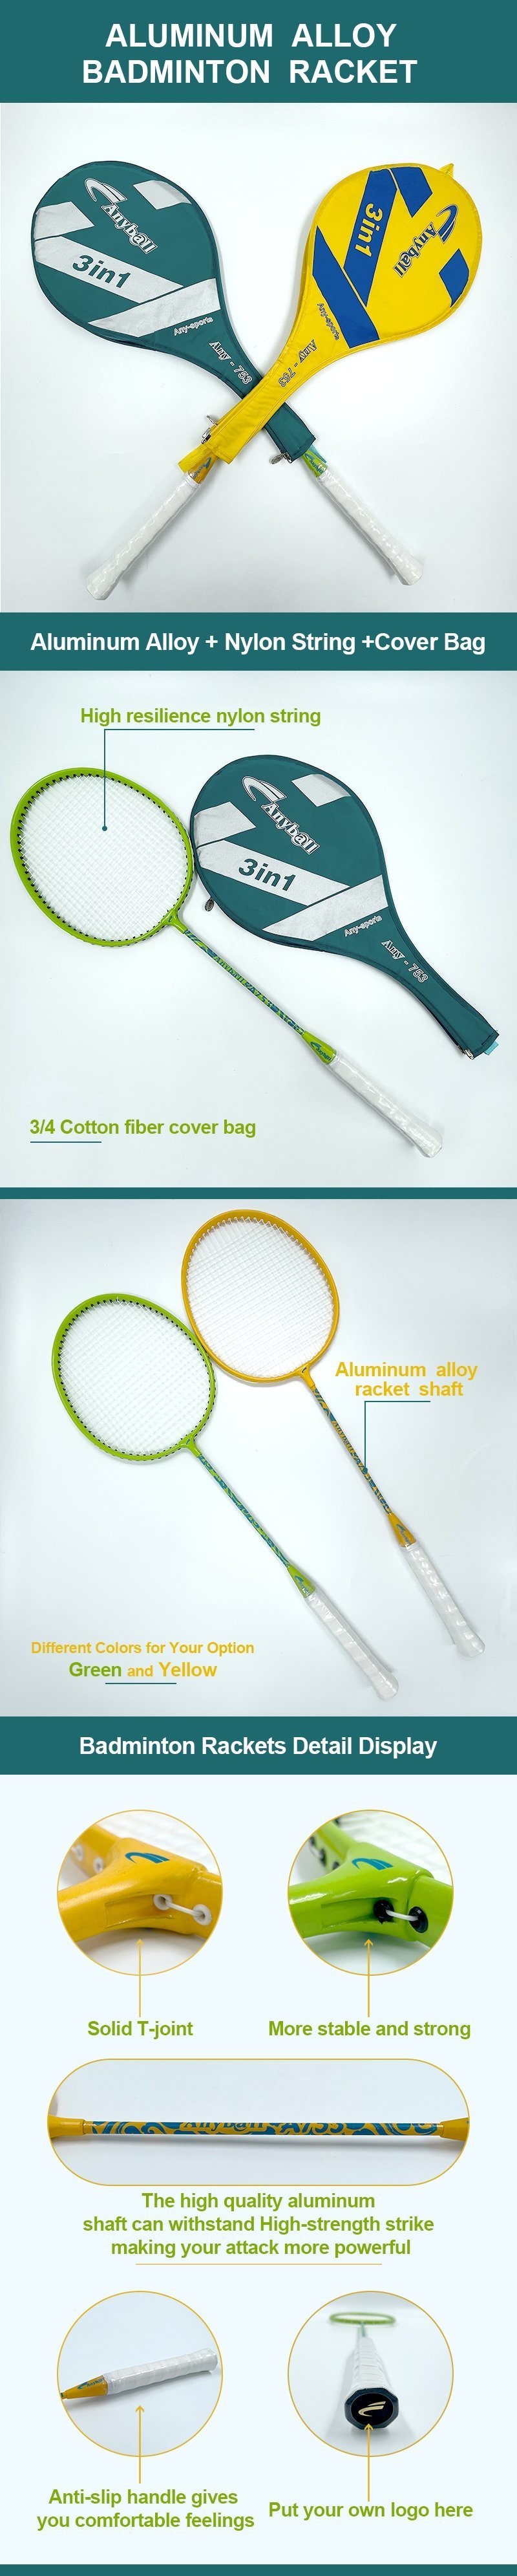 Hot Sale High Quality Aluminum Badminton Racket Outdoor Alloy Badminton Racket